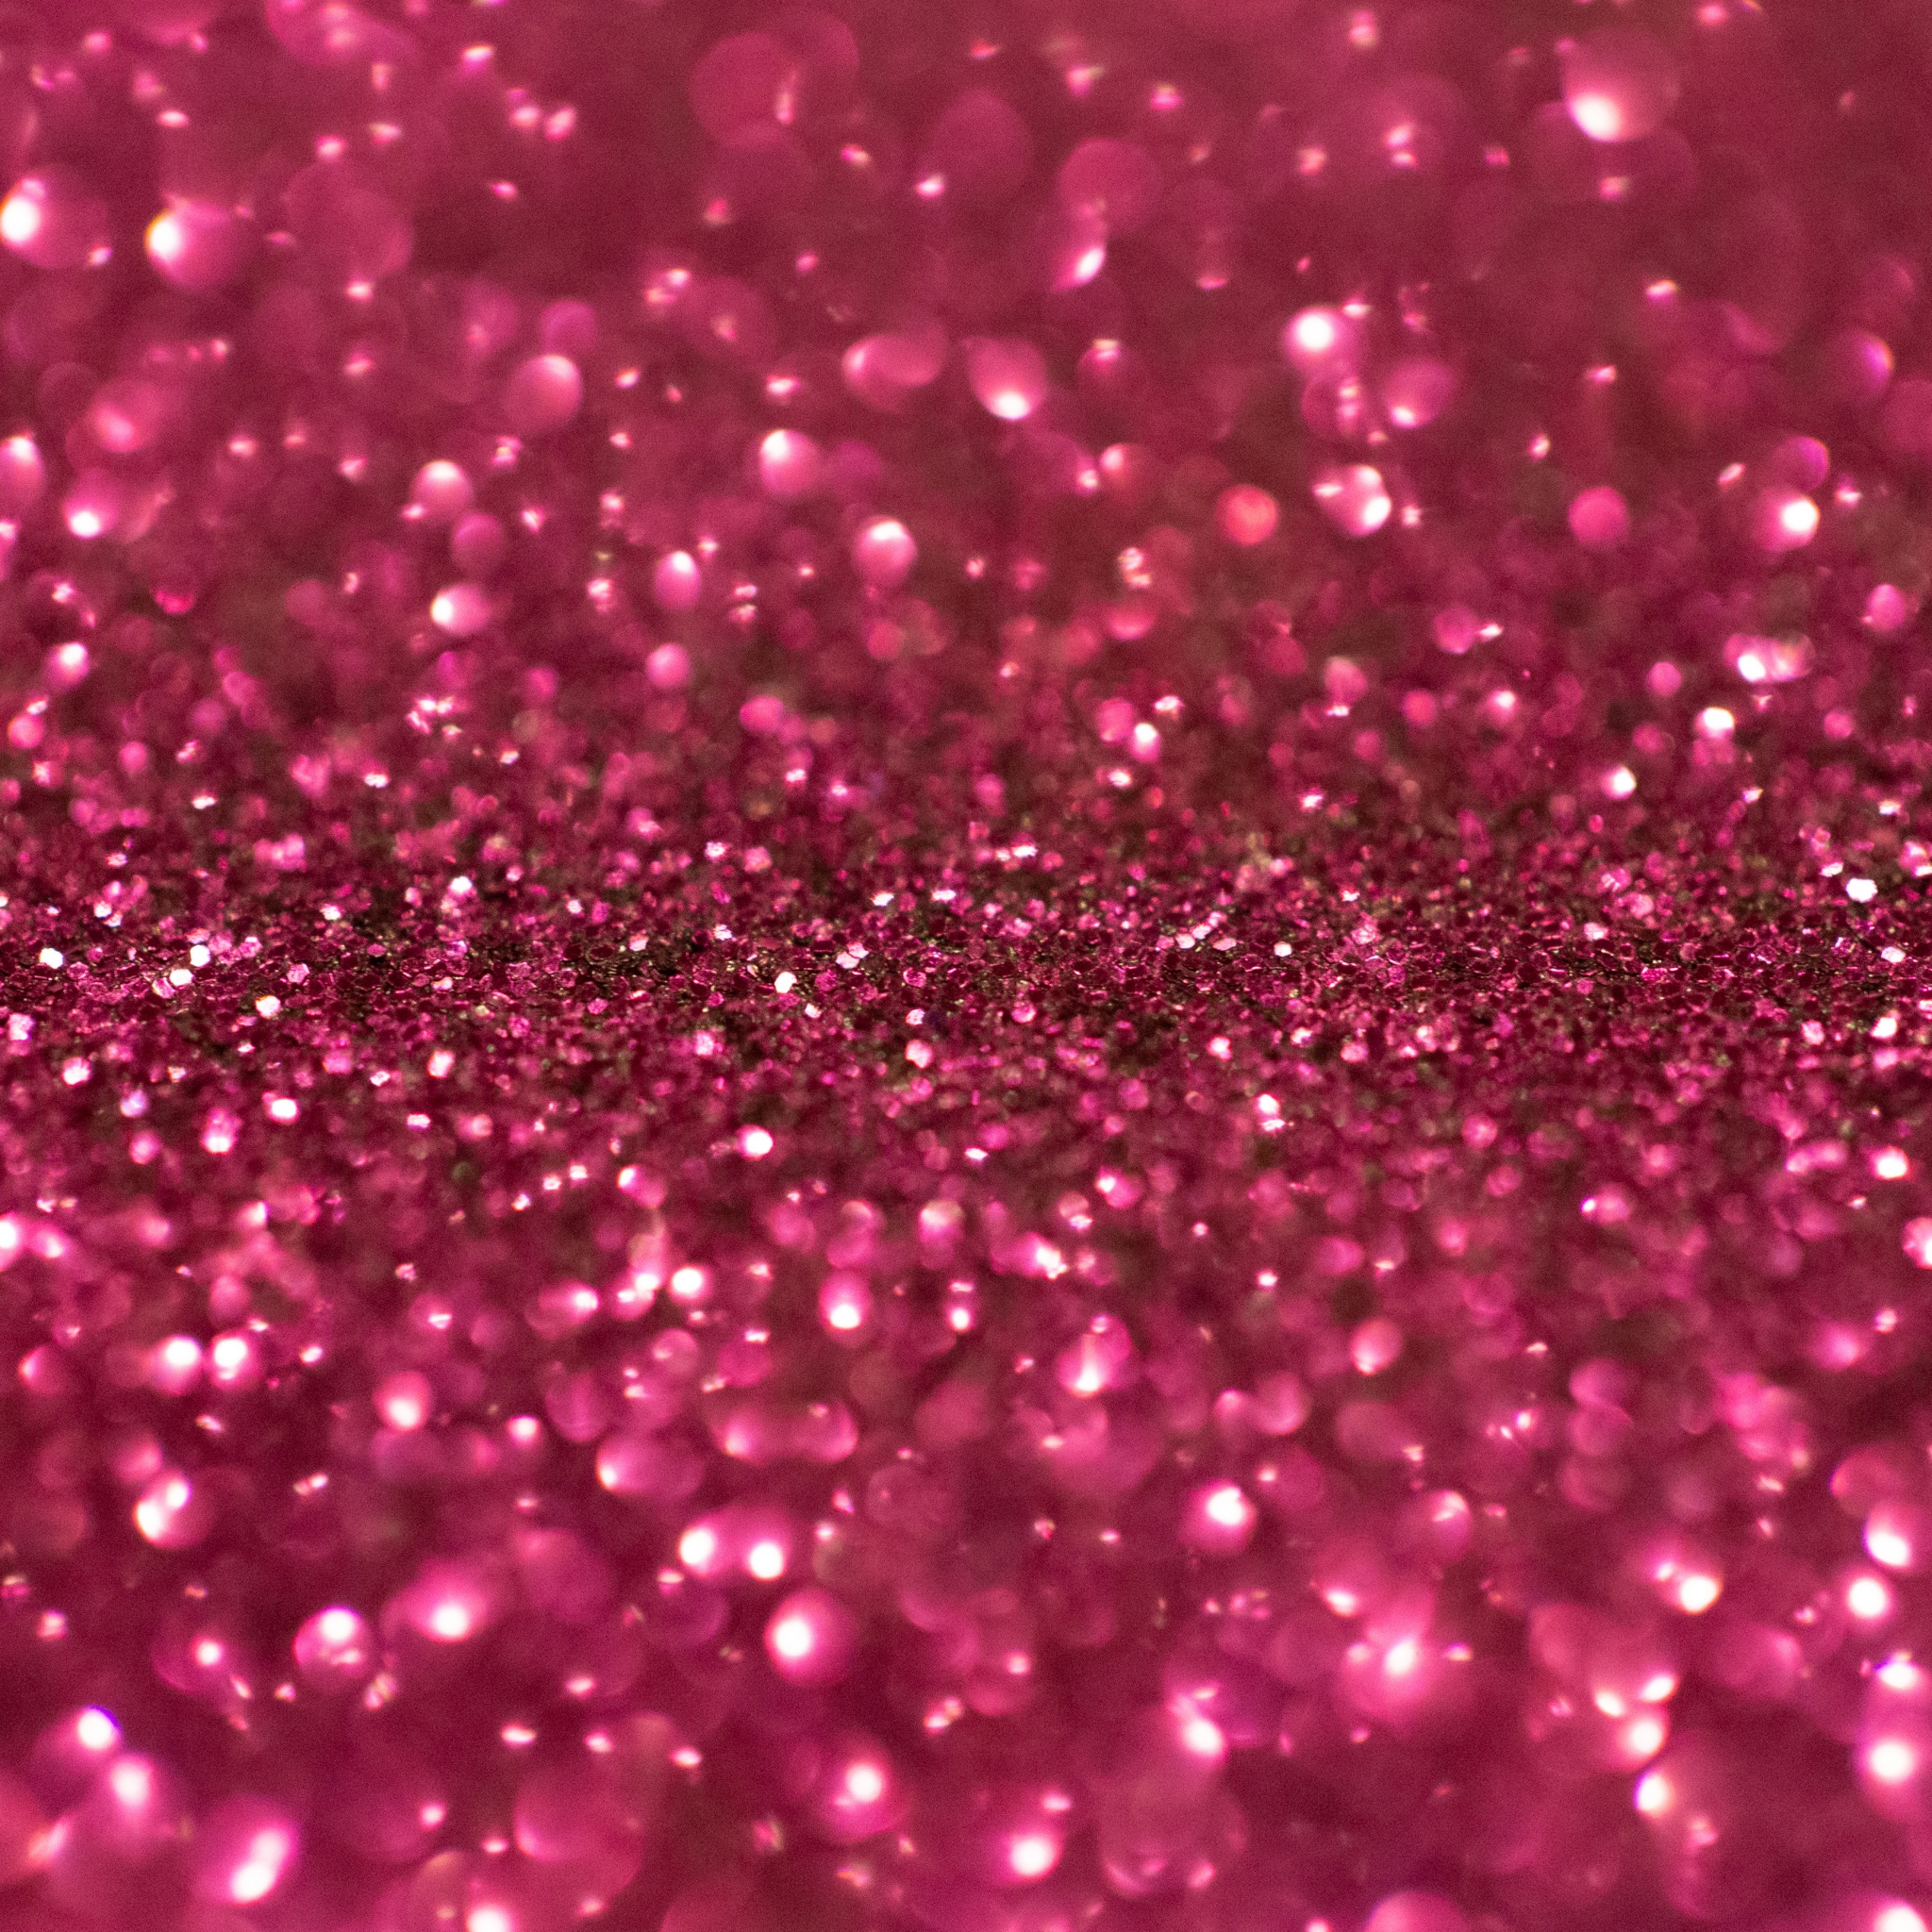 sparkly pink background